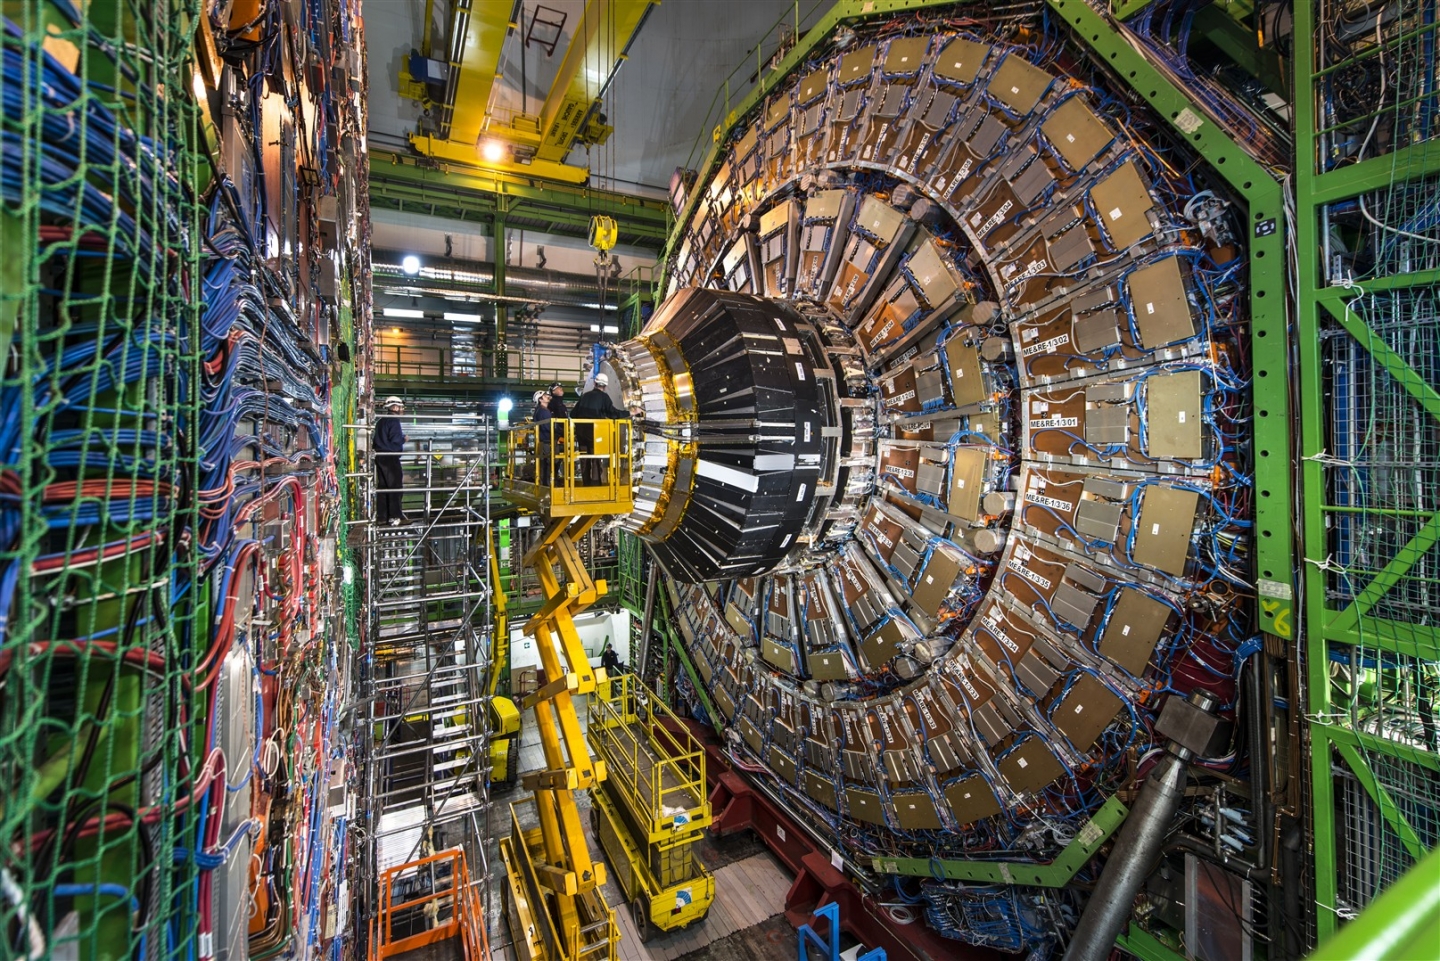 LHC rocks the seesaw model